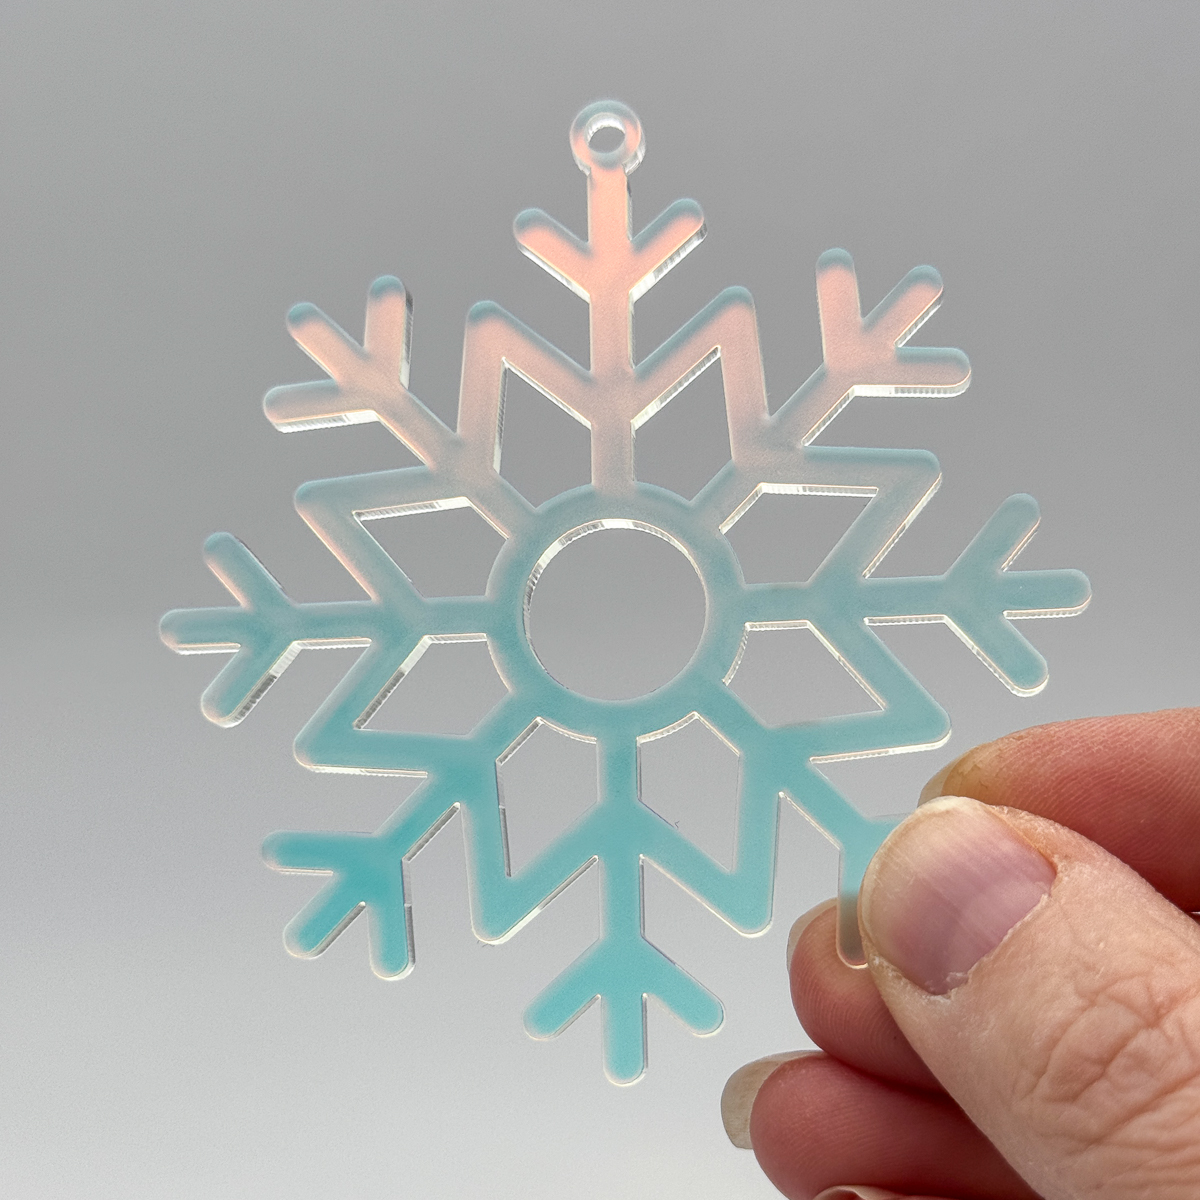 DIY Outdoor Snowflake Decorations - The Handyman's Daughter